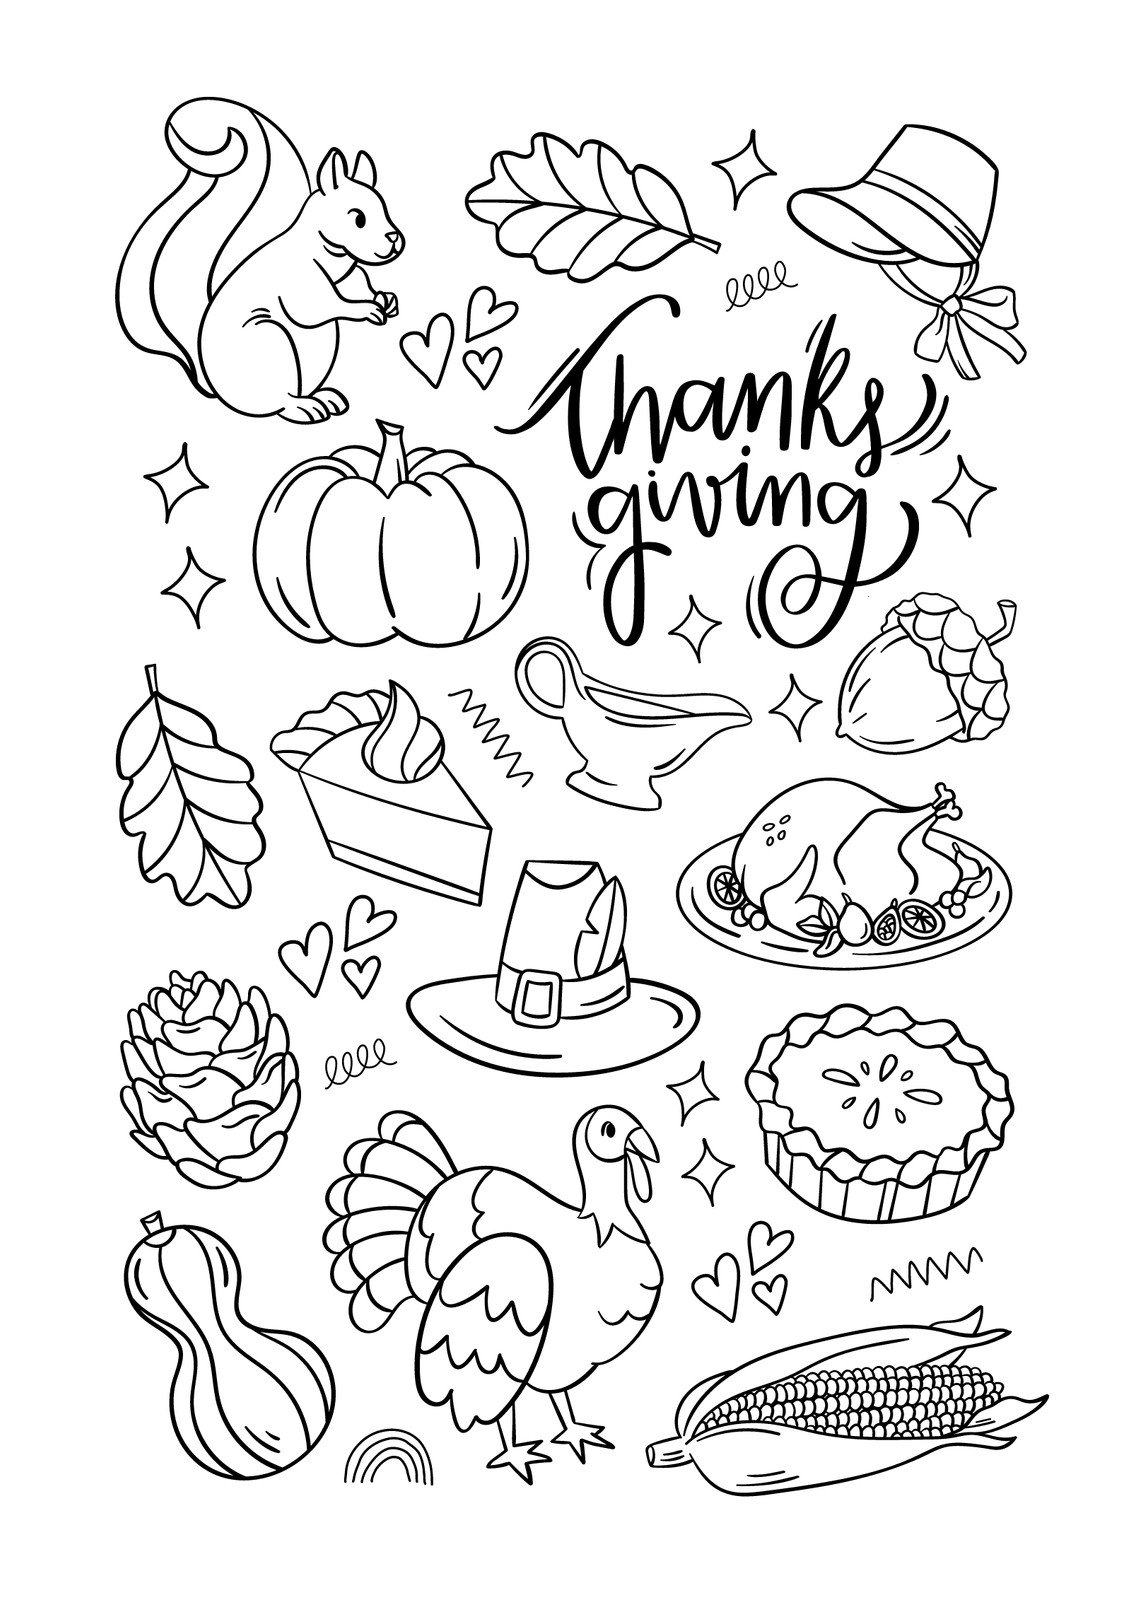 Customize thanksgiving worksheet templates online